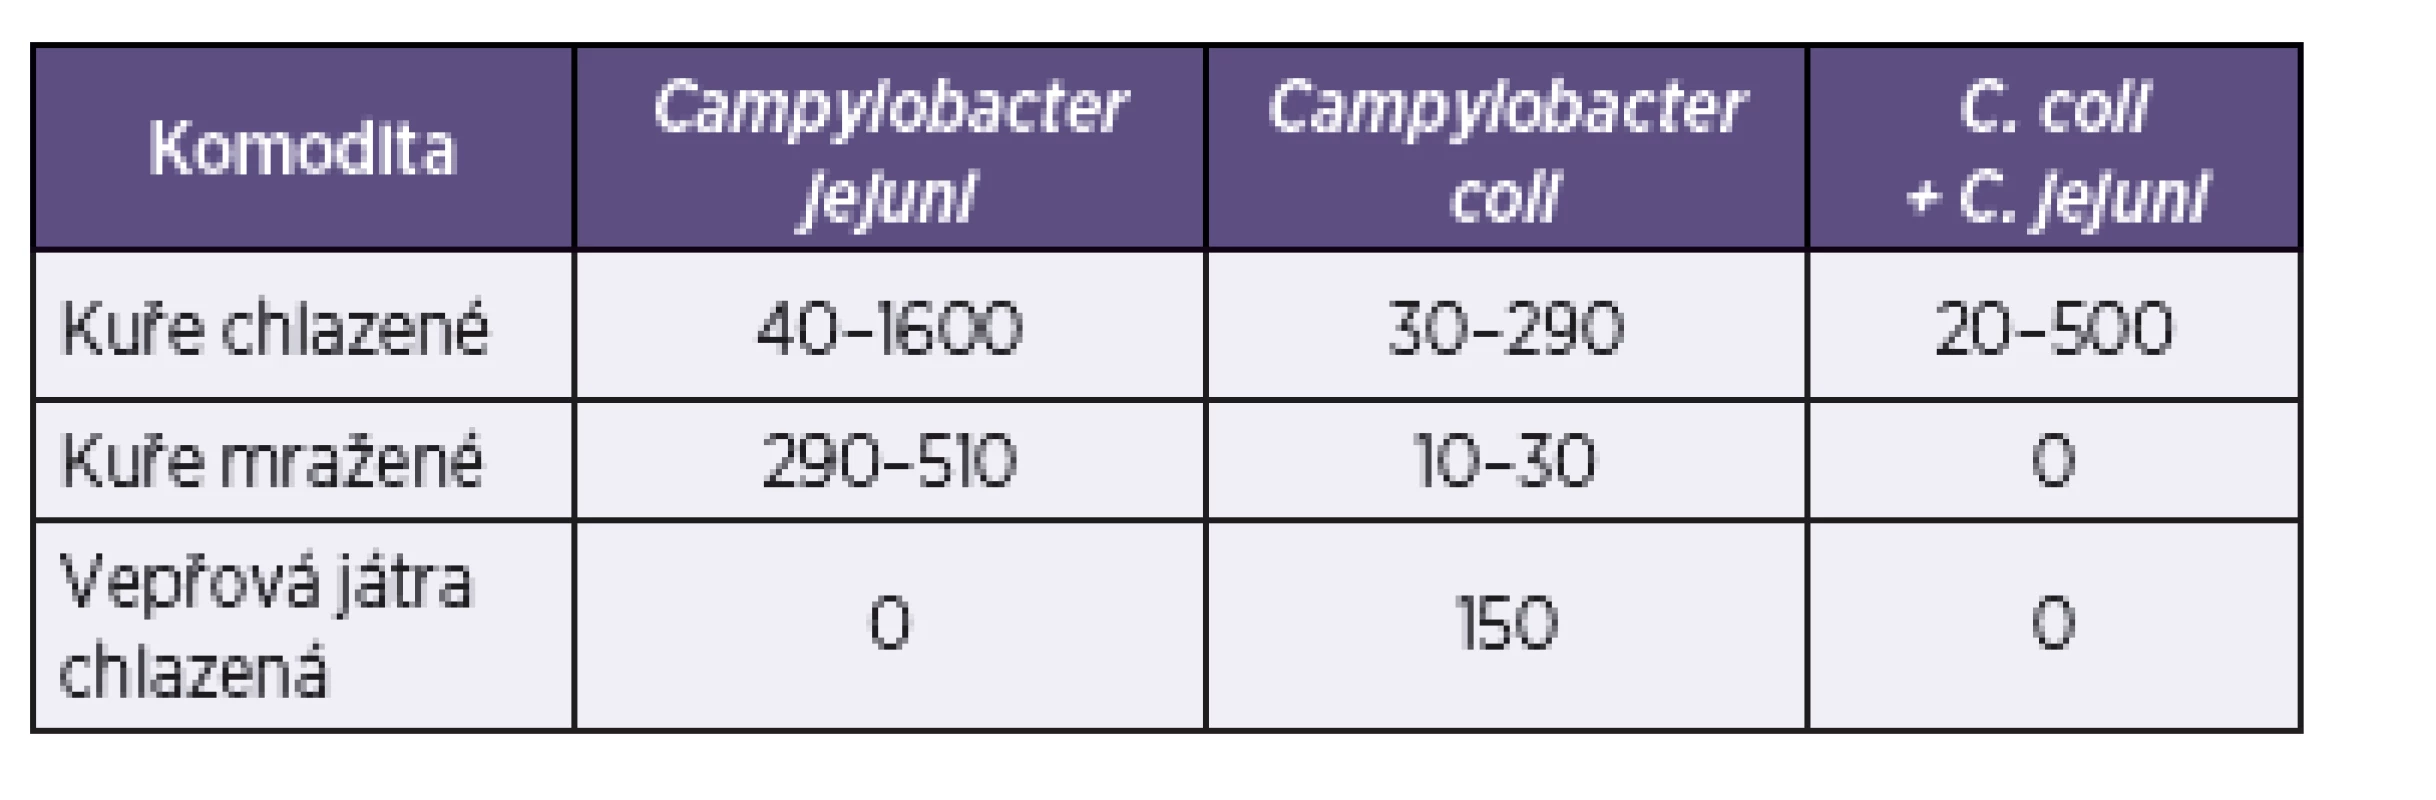 Úroveň kontaminace vyšetřovaných vzorků potravin bakteriemi &lt;i&gt;Campylobacter&lt;/i&gt; spp. (v CFU/g)
Table 3. The level of &lt;i&gt;Campylobacter&lt;/i&gt; contamination of the food samples tested (in CFU/g)